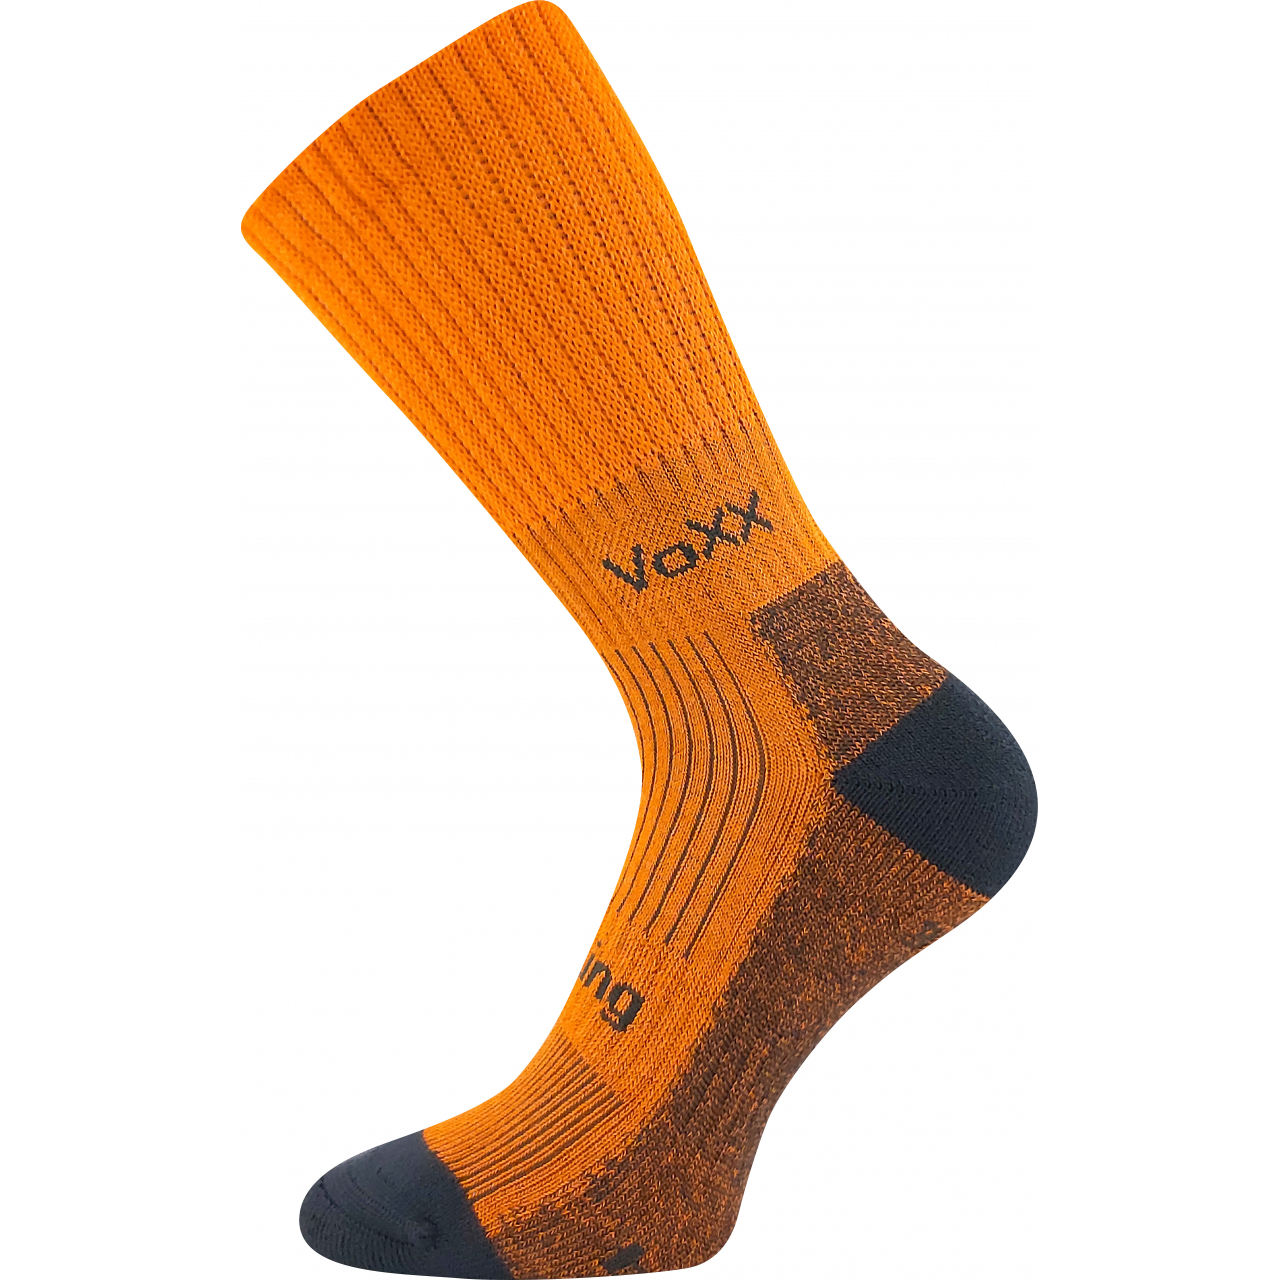 Ponožky unisex bambusové silné Voxx Bomber - oranžové, 35-38